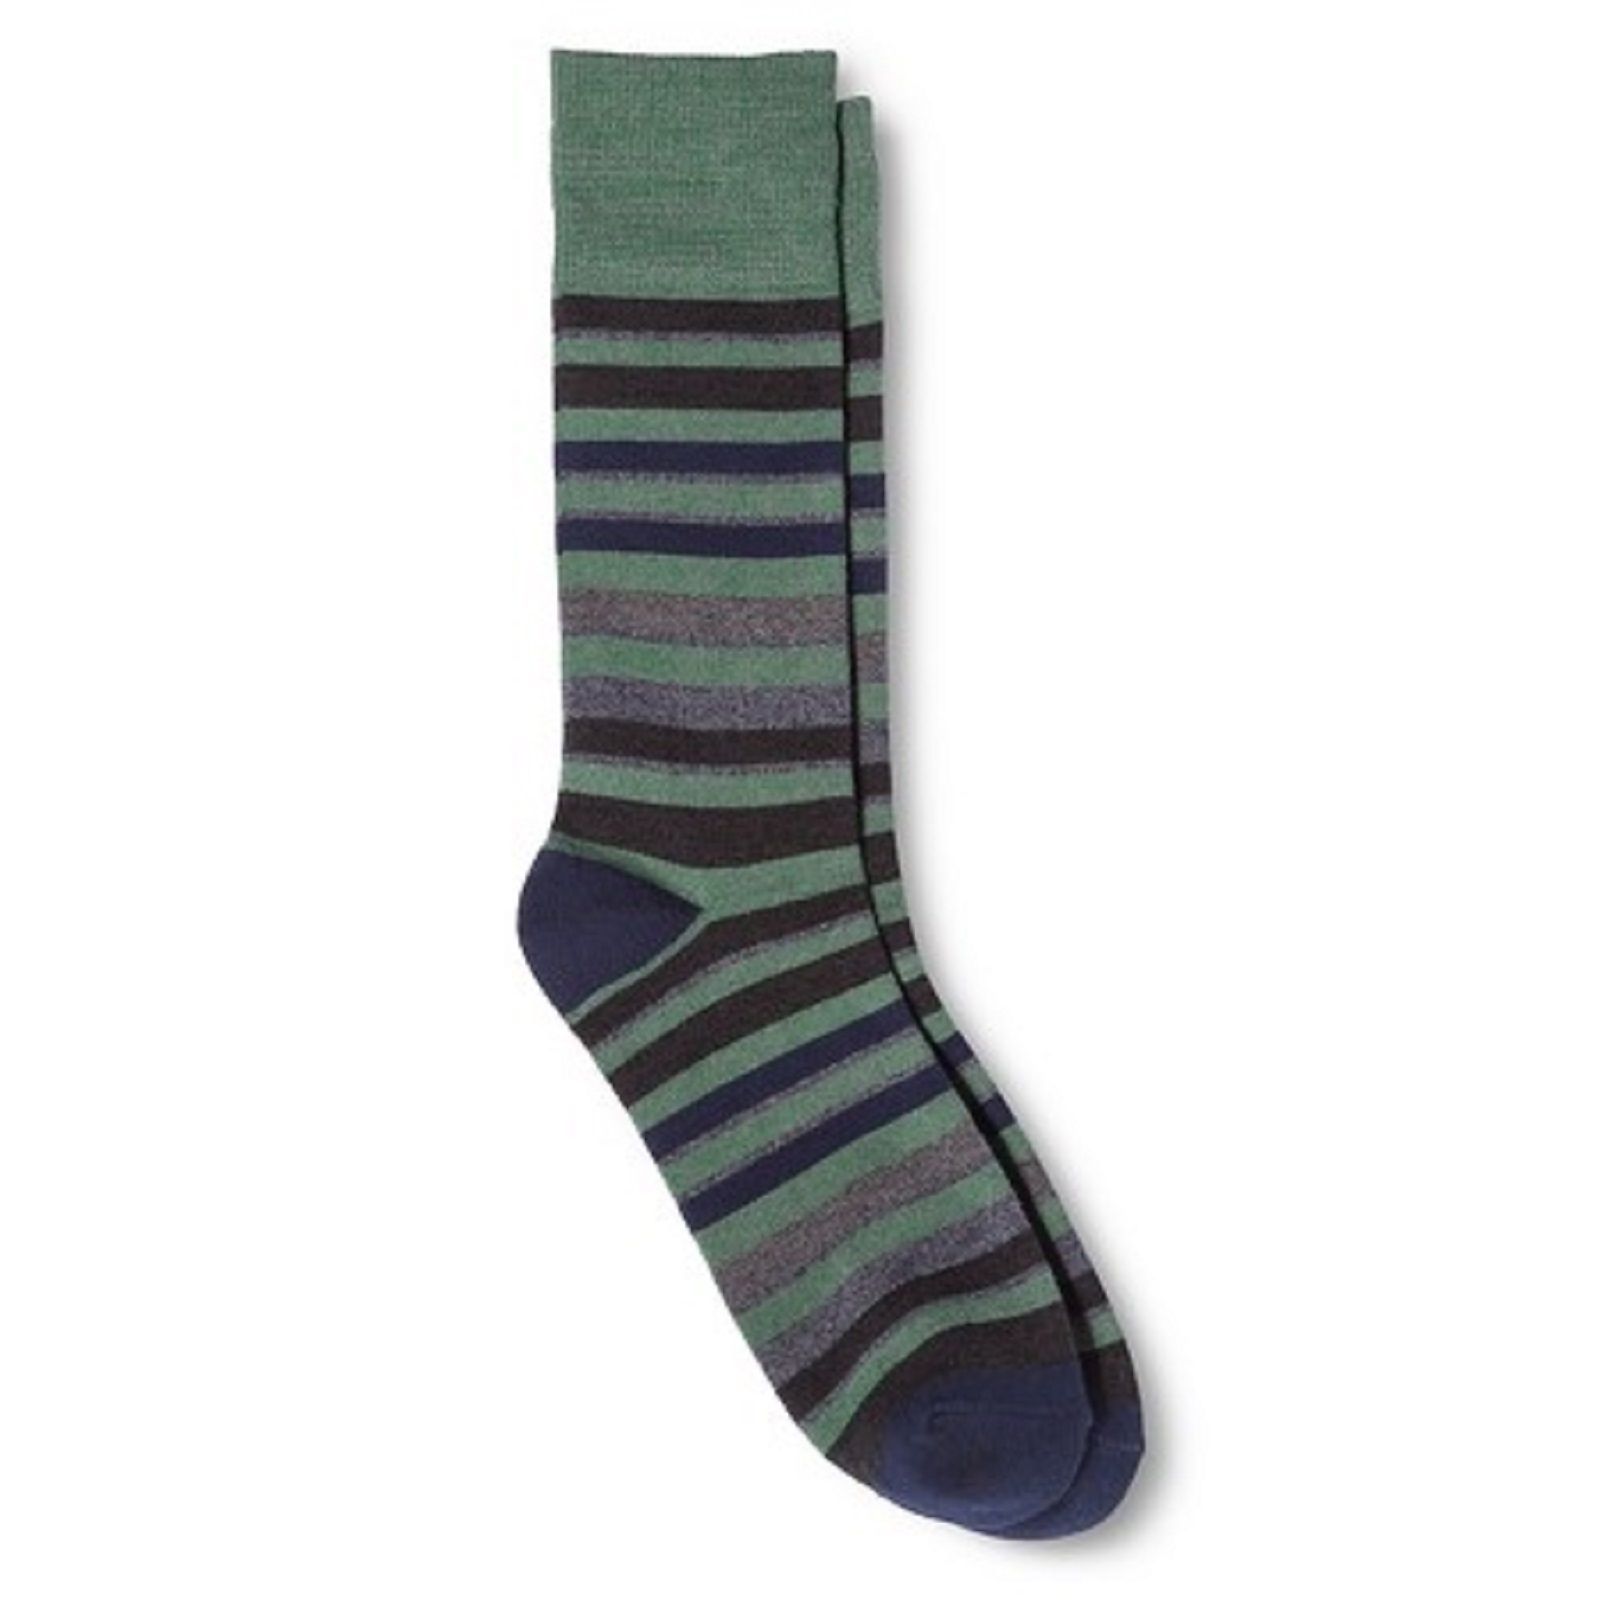 Dress Socks 6 12 Merona Green Blue Gray Stripes NEW Mens - $12.00